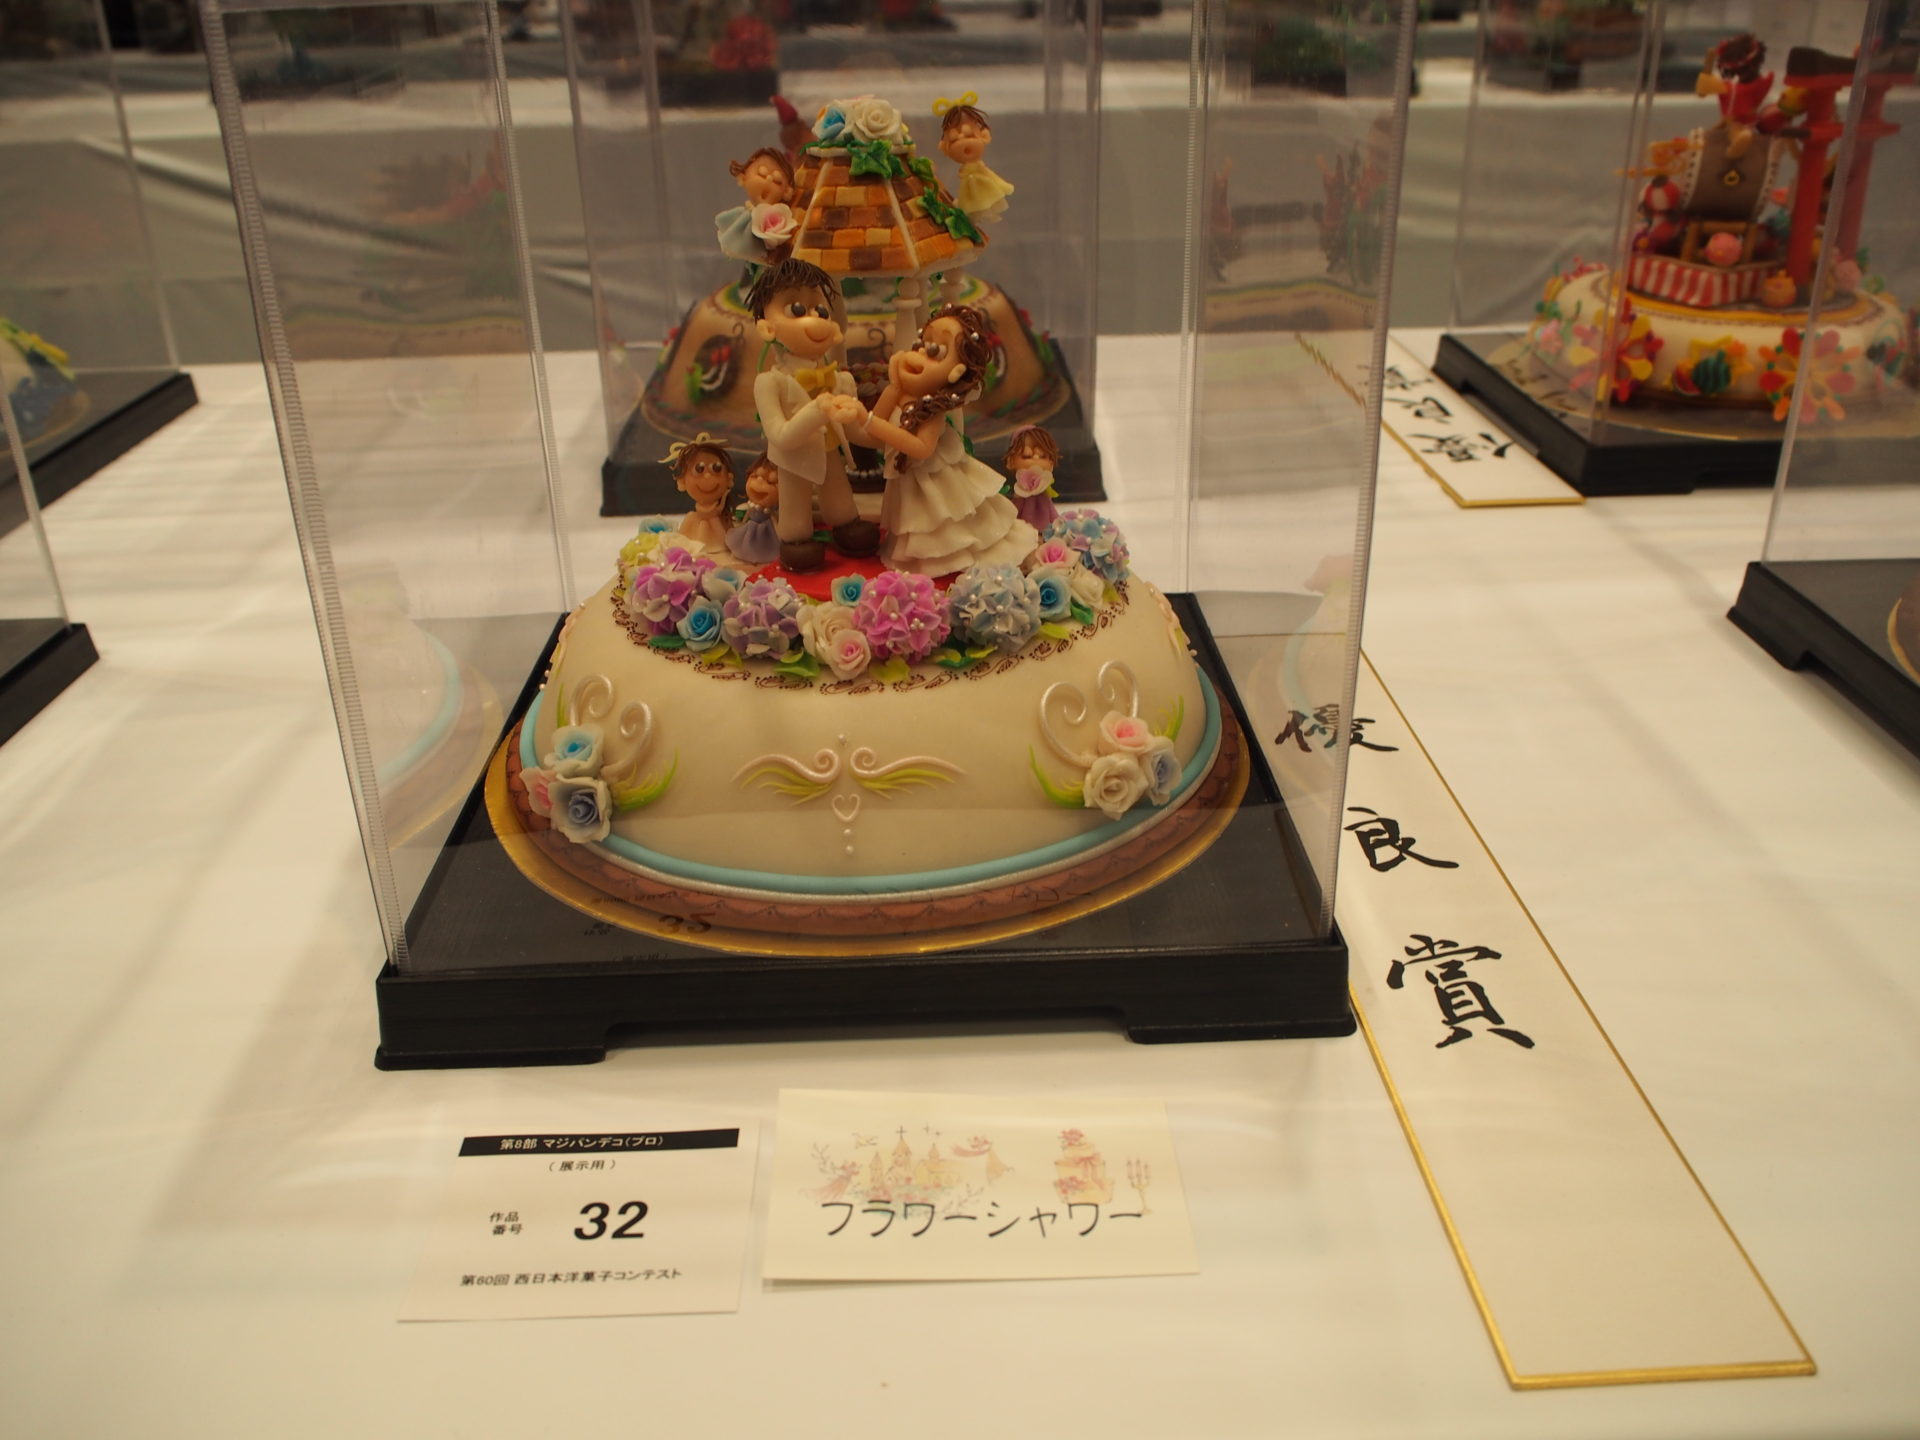 第60回 西日本洋菓子コンテスト入賞者発表 画像入り 一般社団法人 兵庫県洋菓子協会